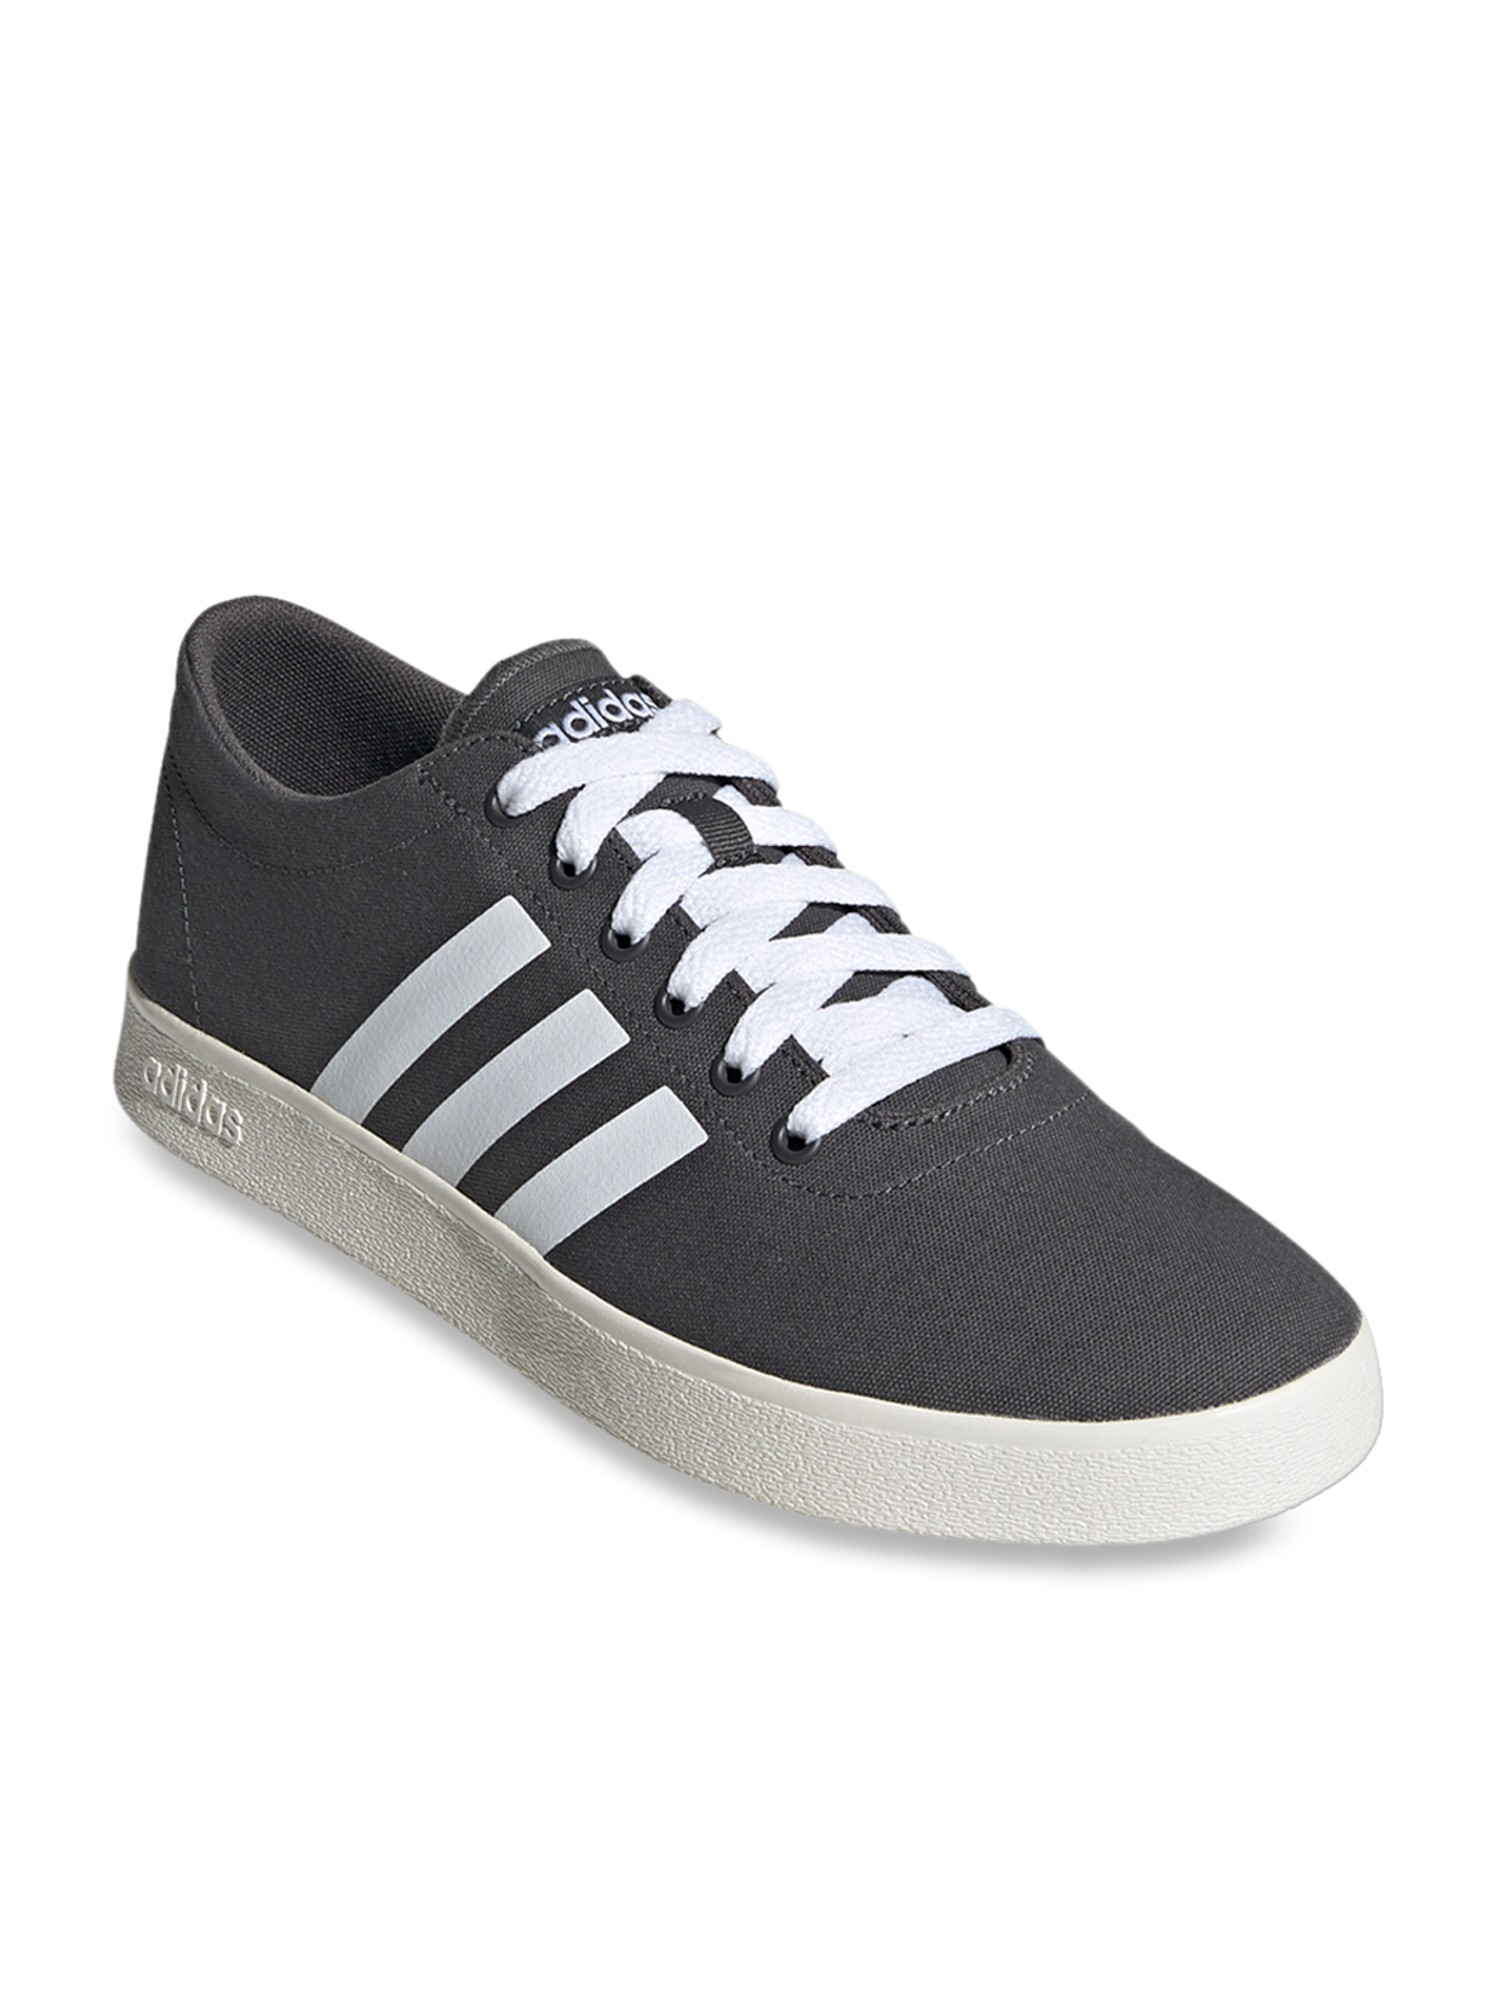 Buy Adidas Easy Vulc 2.0 Grey Sneakers for Men at Best Price Tata CLiQ